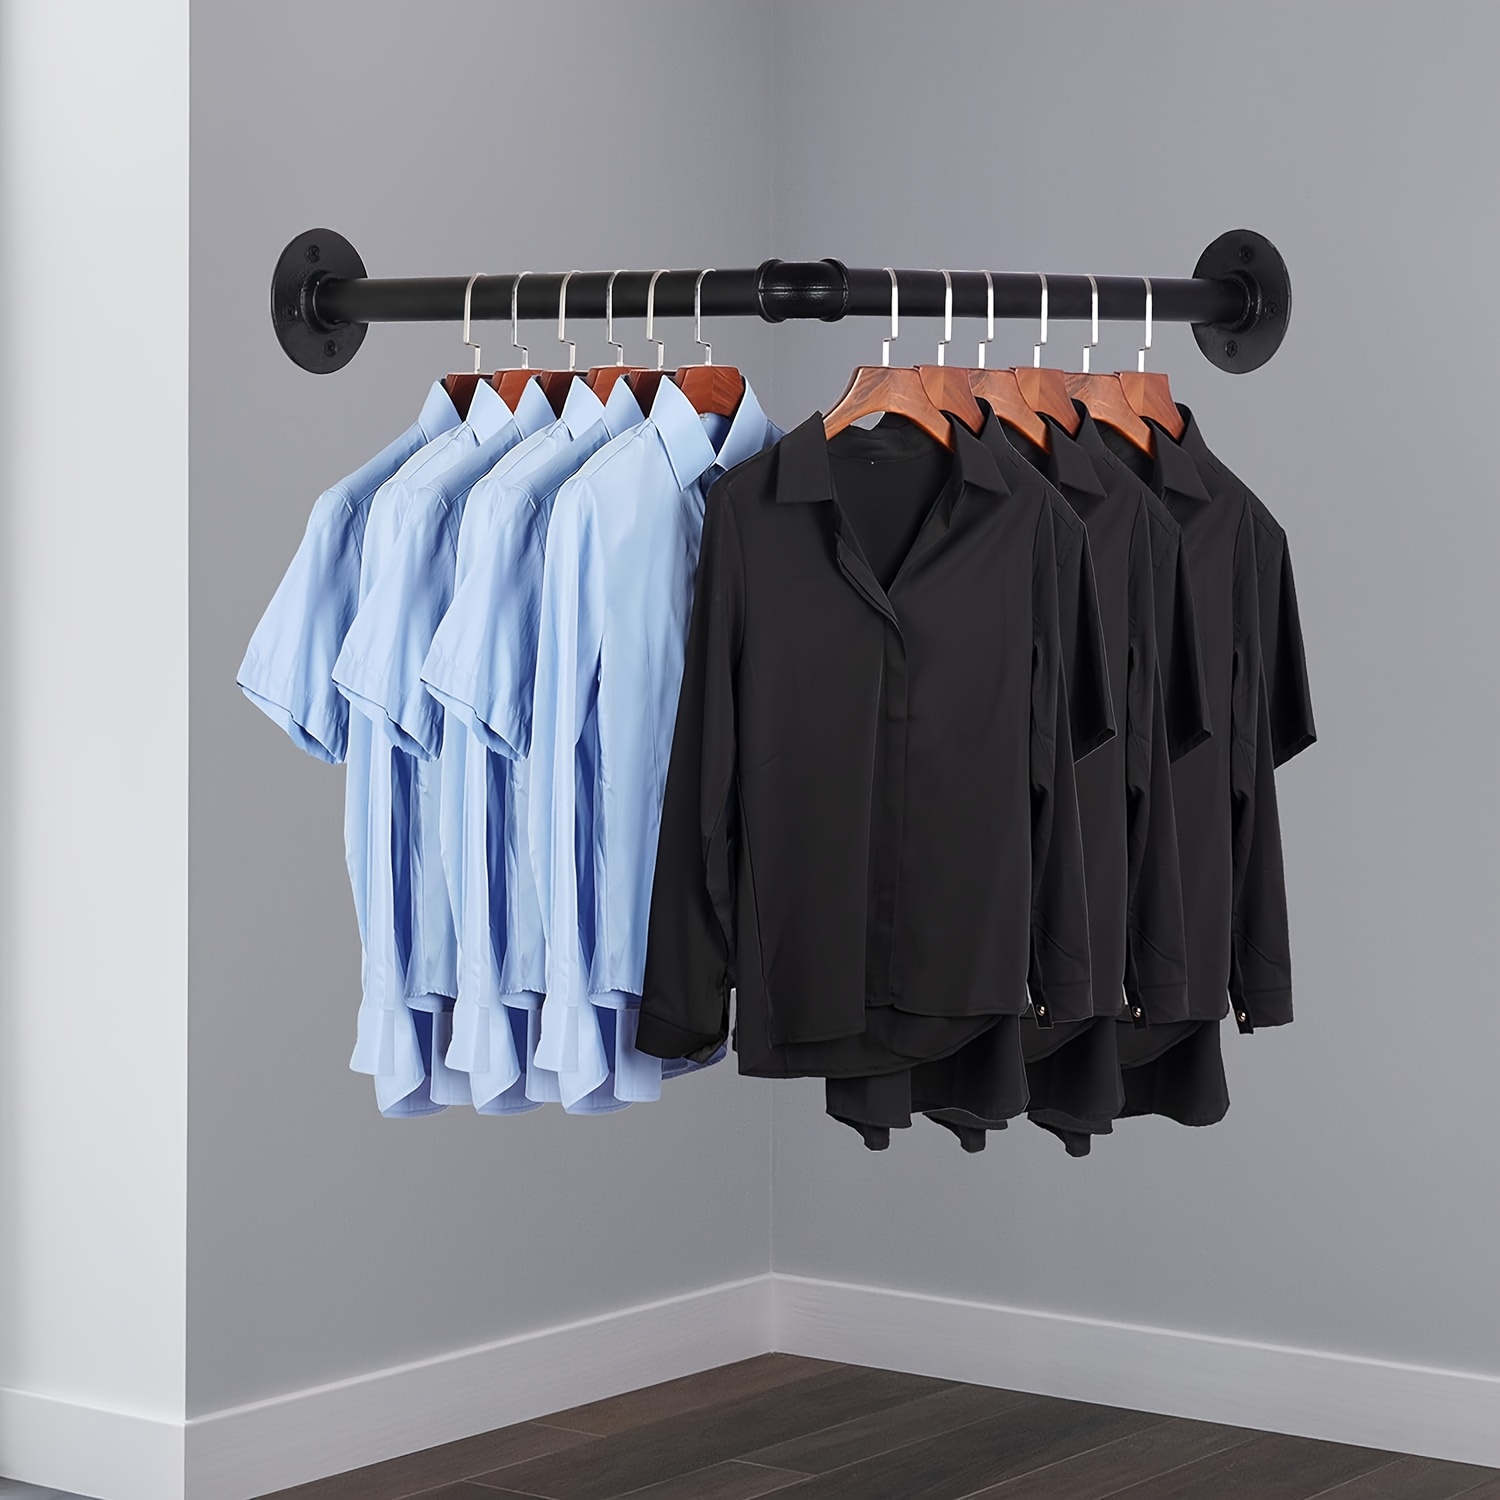 DIY Wall Mounted Clothing Rack